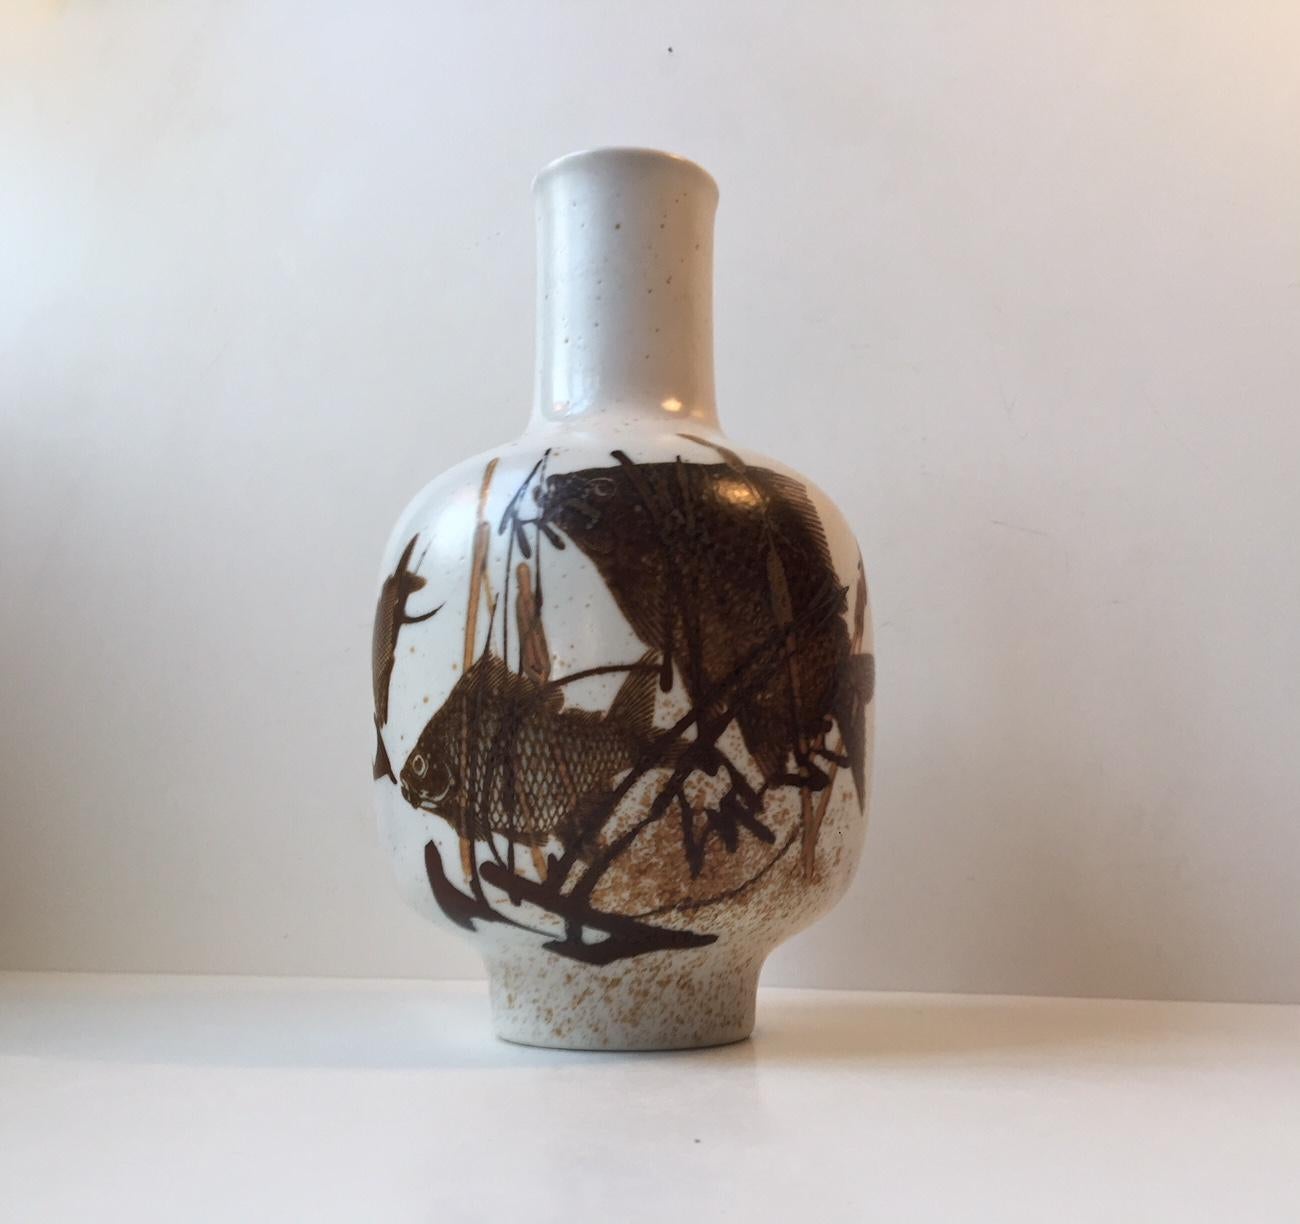 Glazed Midcentury Ceramic Vase by Nils Thorsson for Royal Copenhagen, 1970s